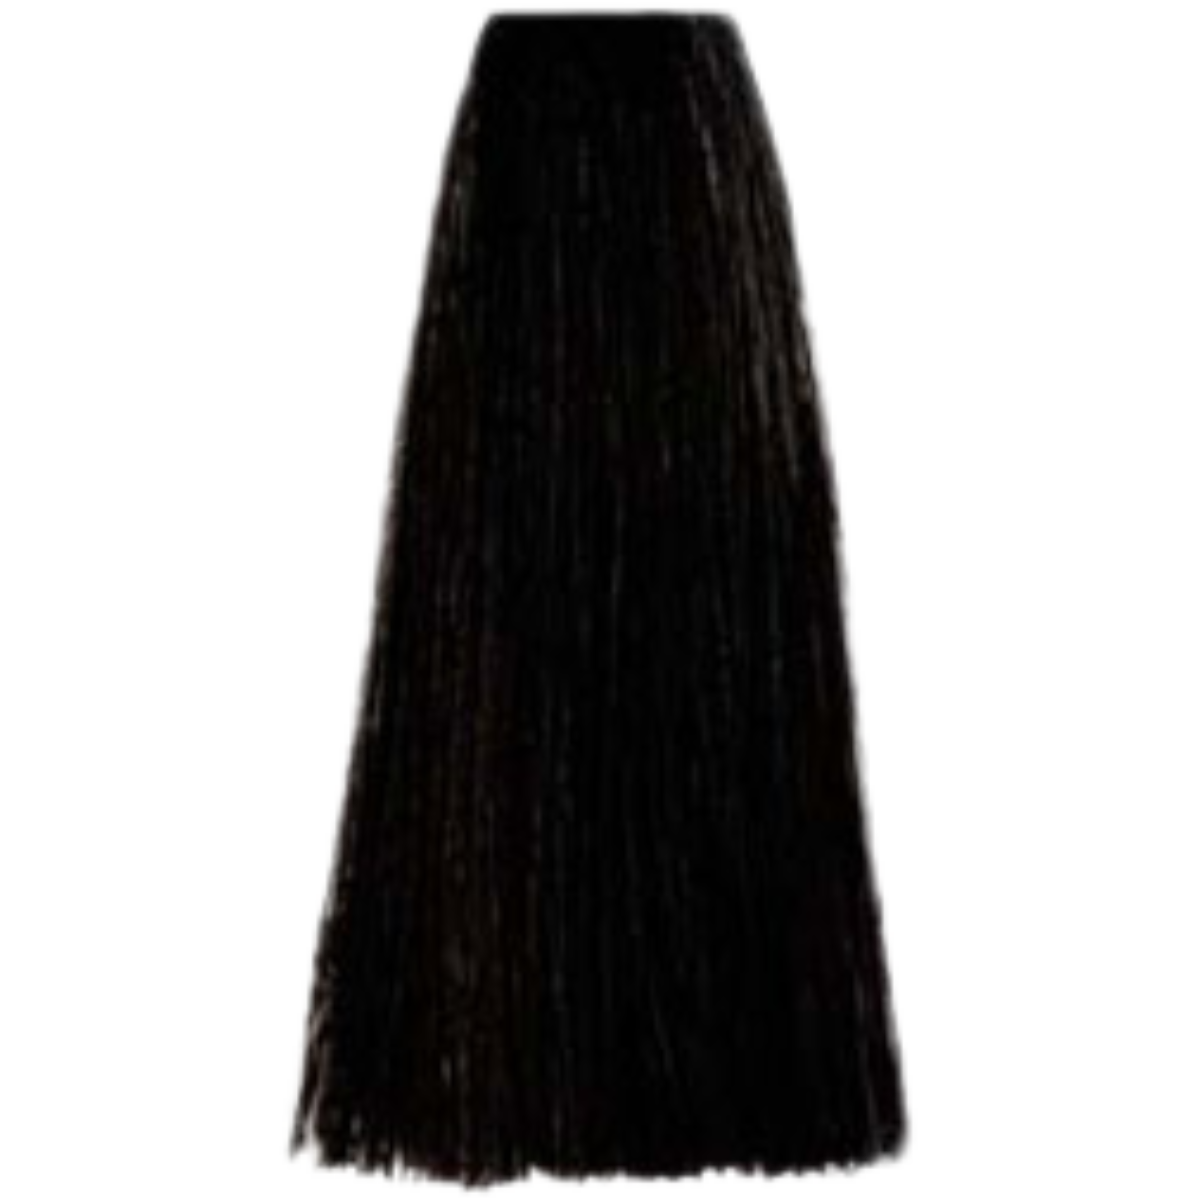 צבע שיער בסיס BLACK 1.0 פארמויטה FarmaVita צבע לשיער 100 גרם